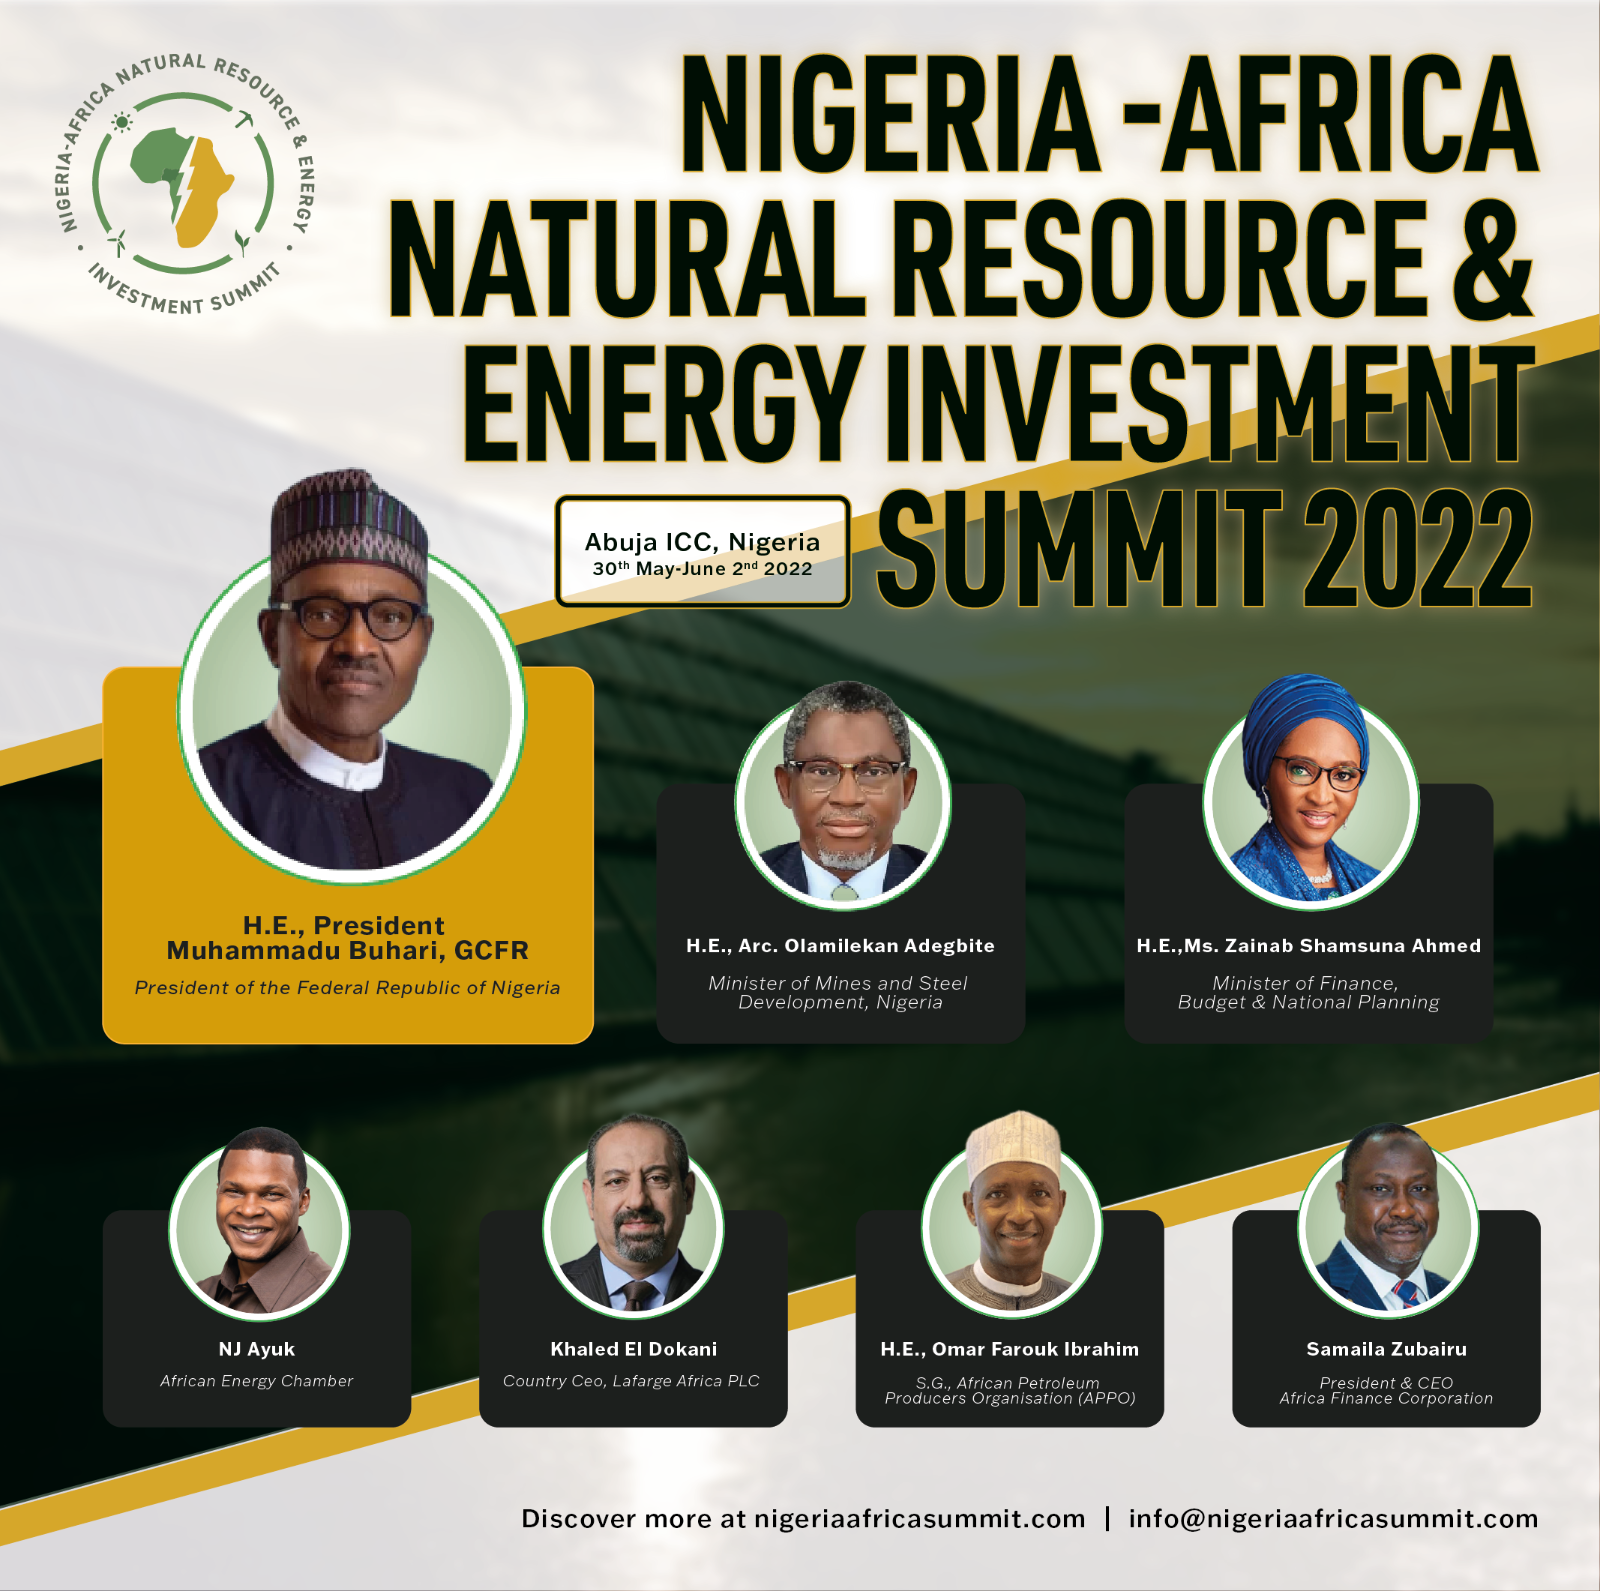 Nigeria-Africa Natural Resource & Investment Summit 2022